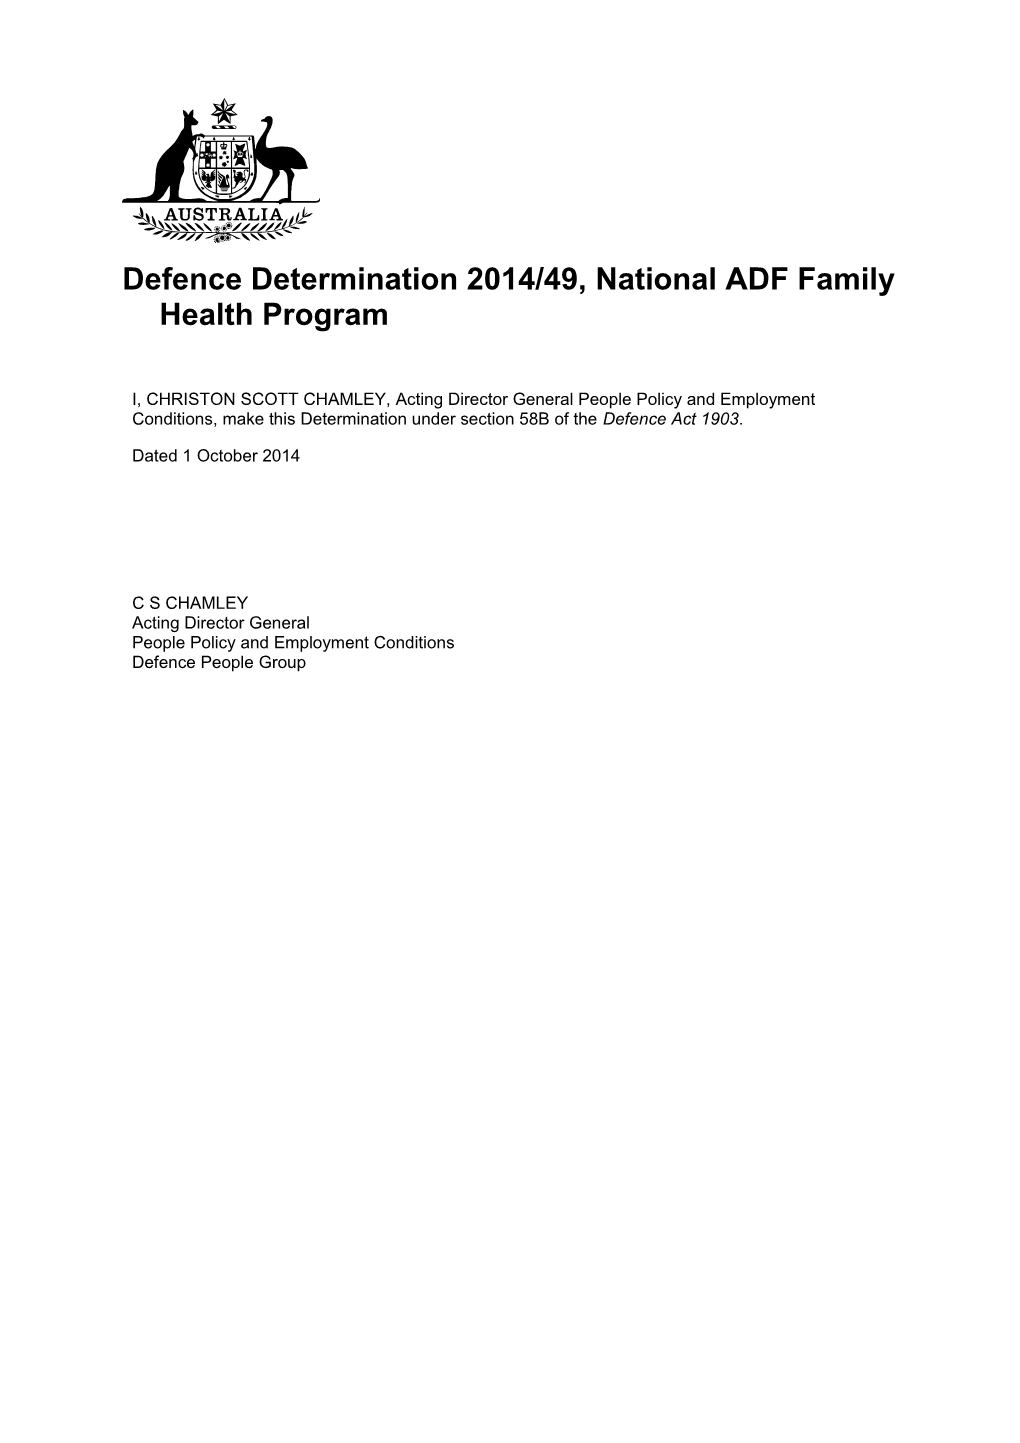 Defence Determination 2014/49, National ADF Family Health Program